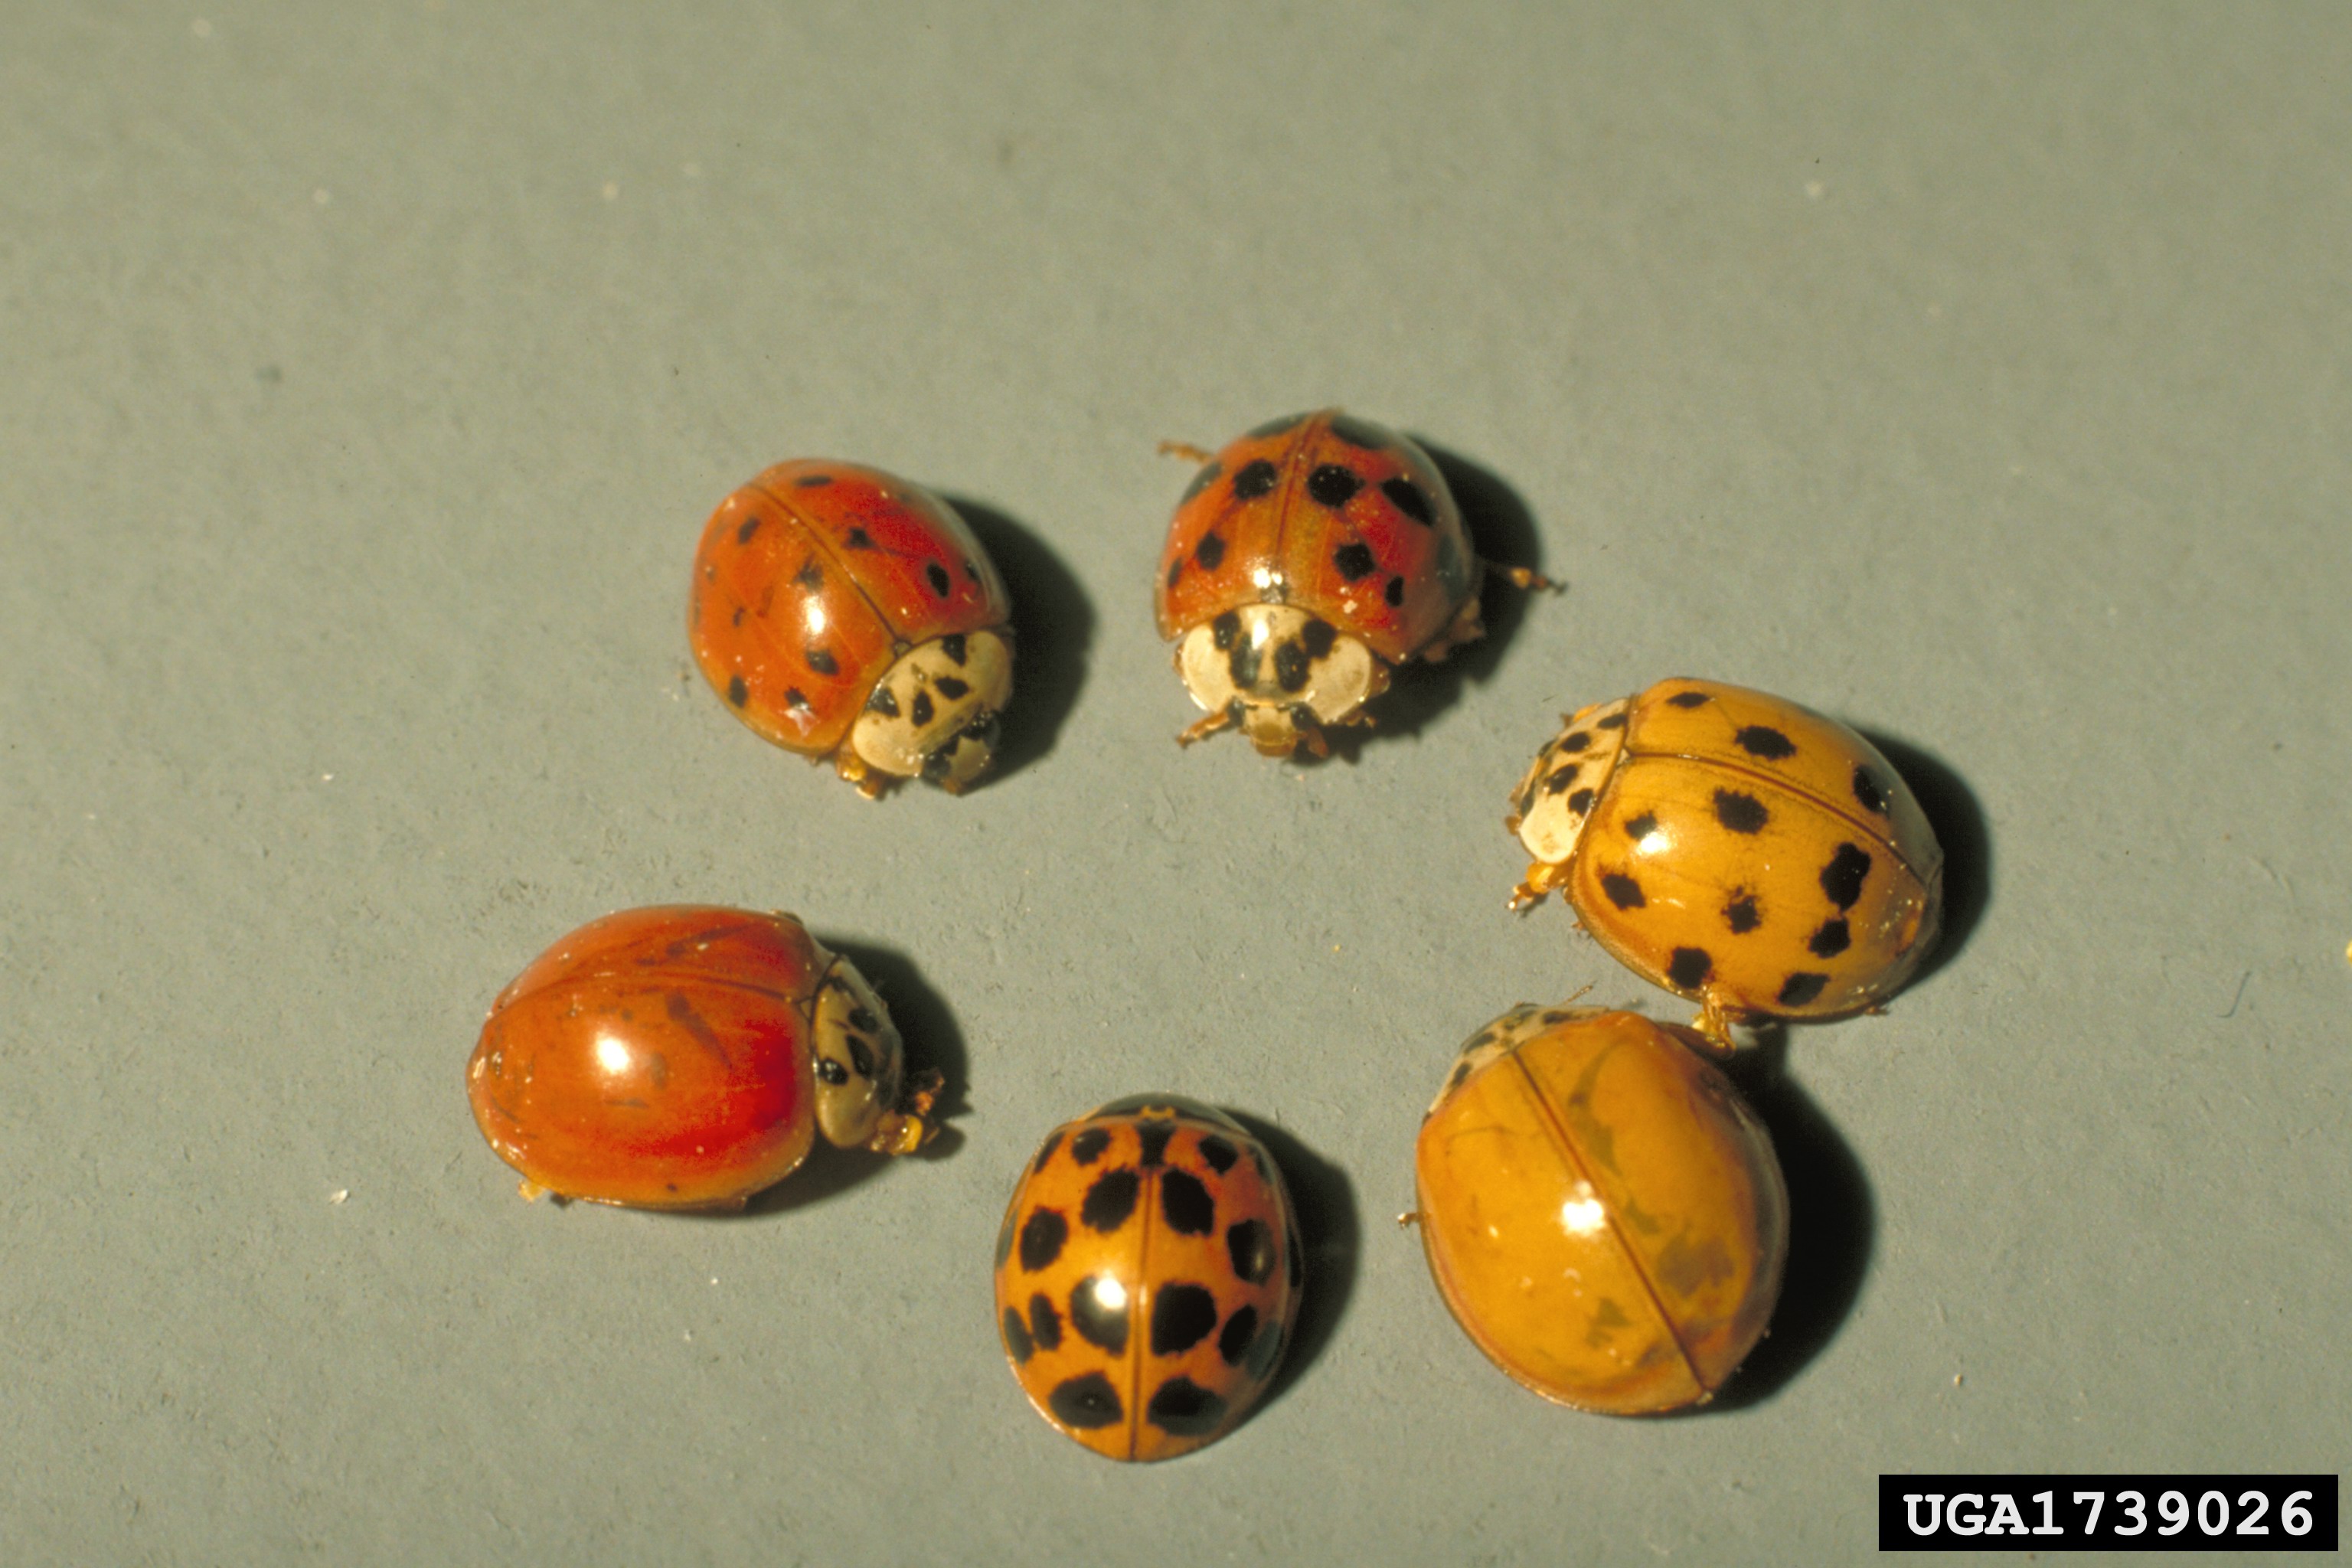 Buzz reccomend Asian ladybug pheromone trap